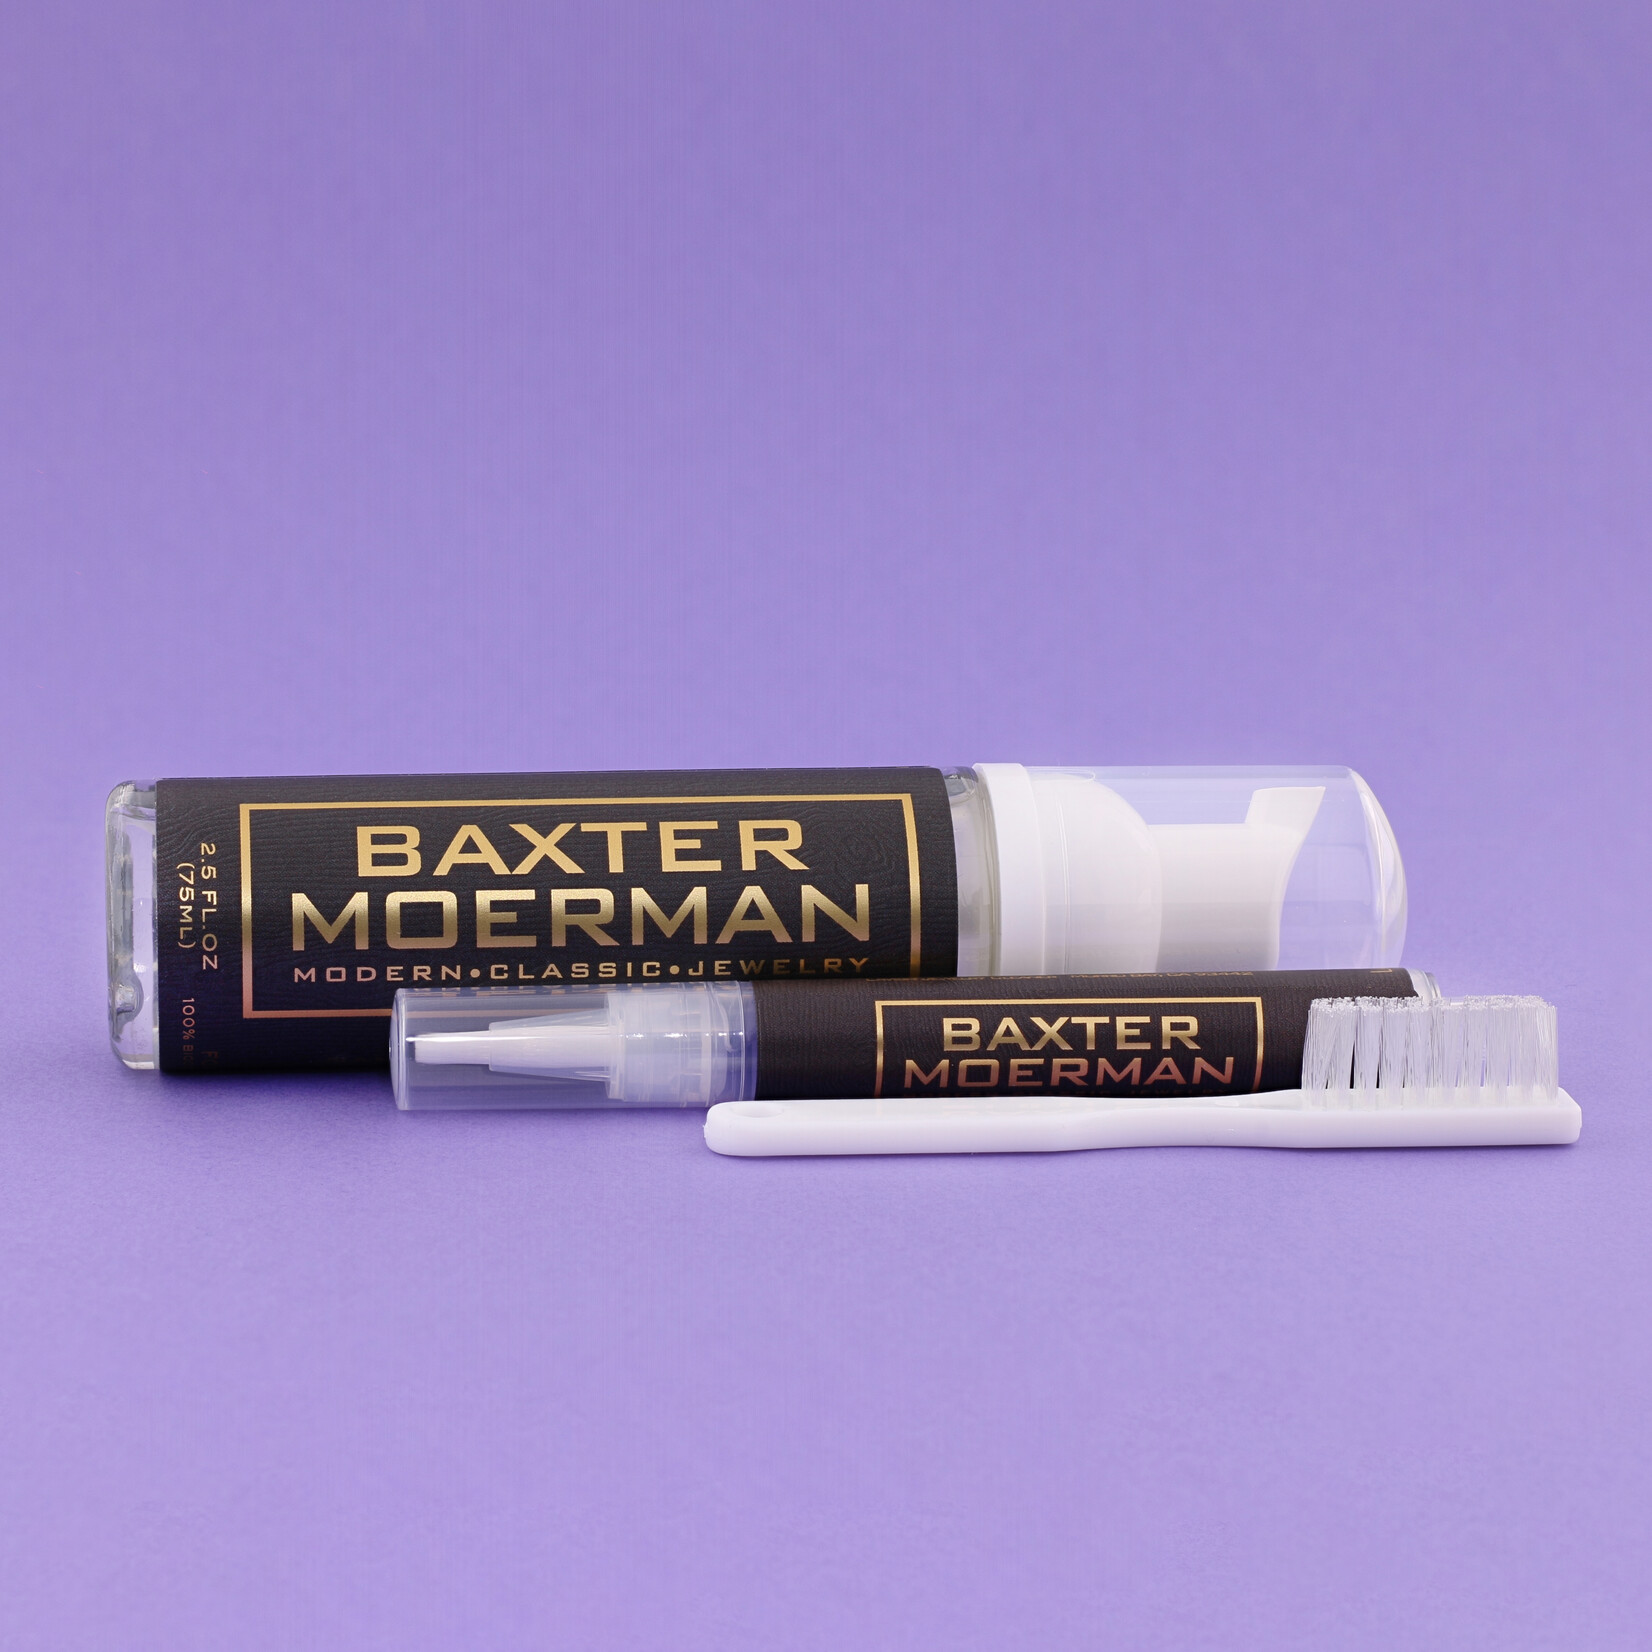 Baxter Moerman Jewelry Cleaner Care Kit: Foaming Cleaner, Travel  Pen, & Scrub Brush